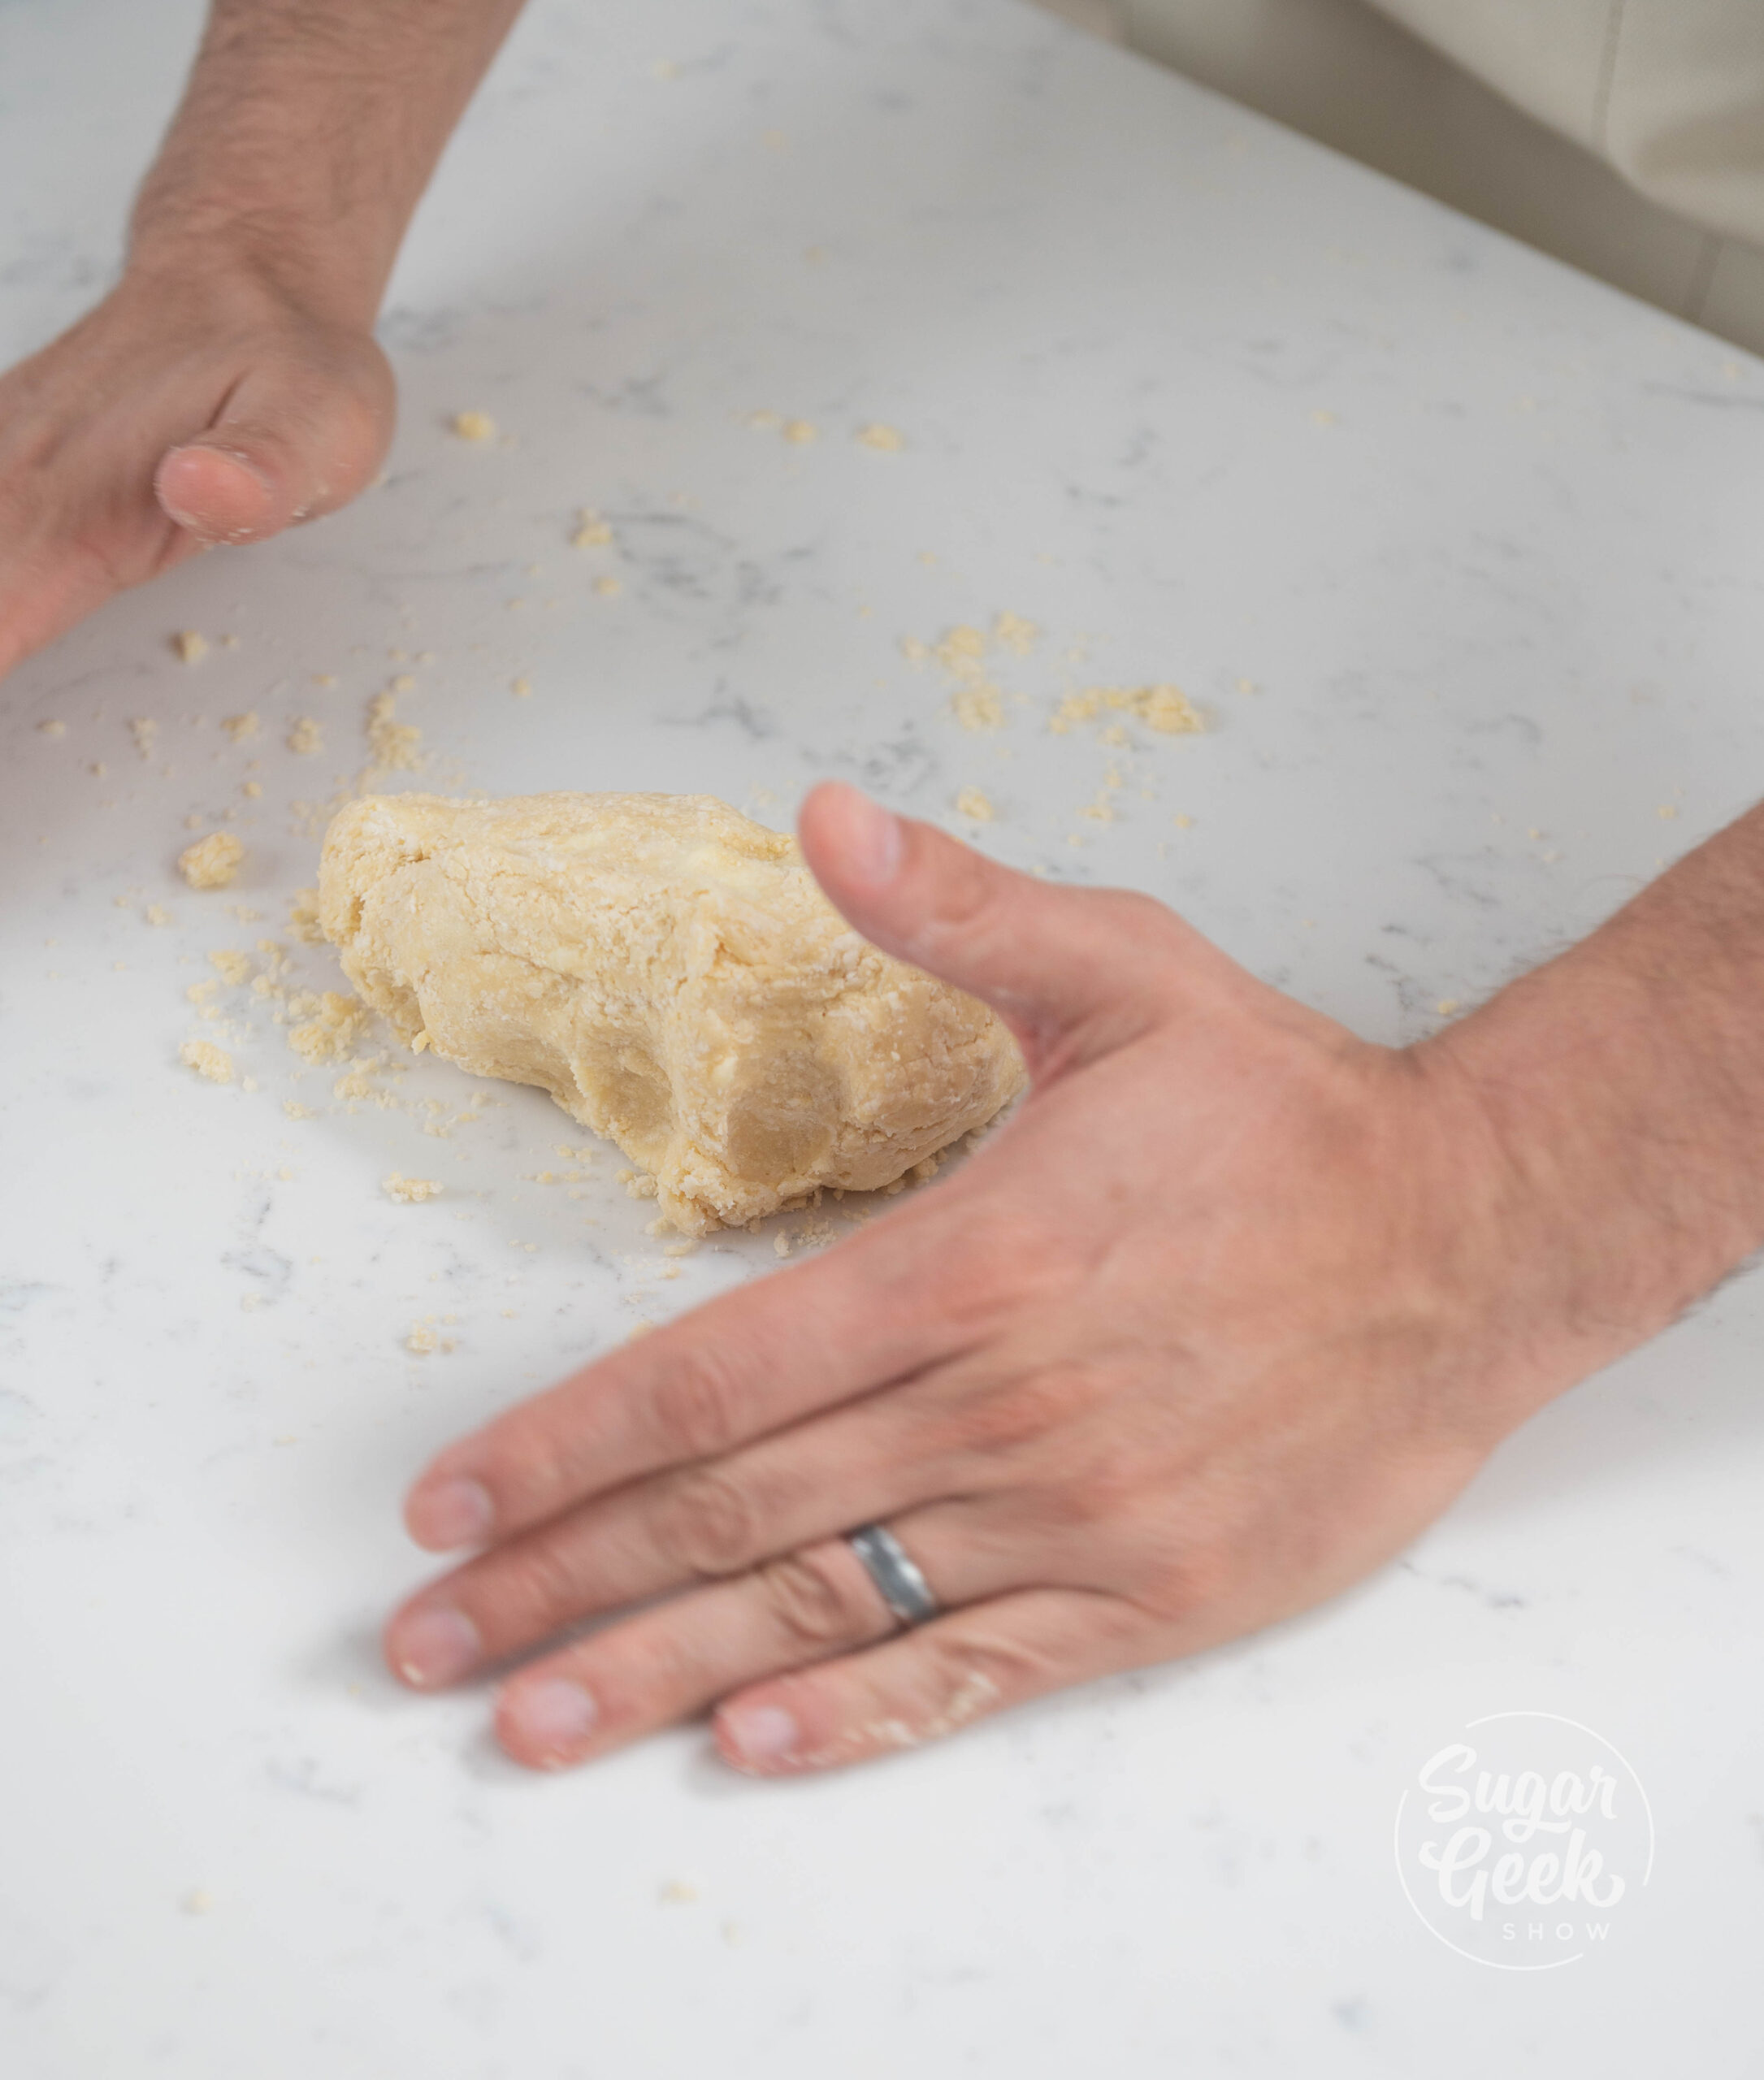 hands kneading dough.